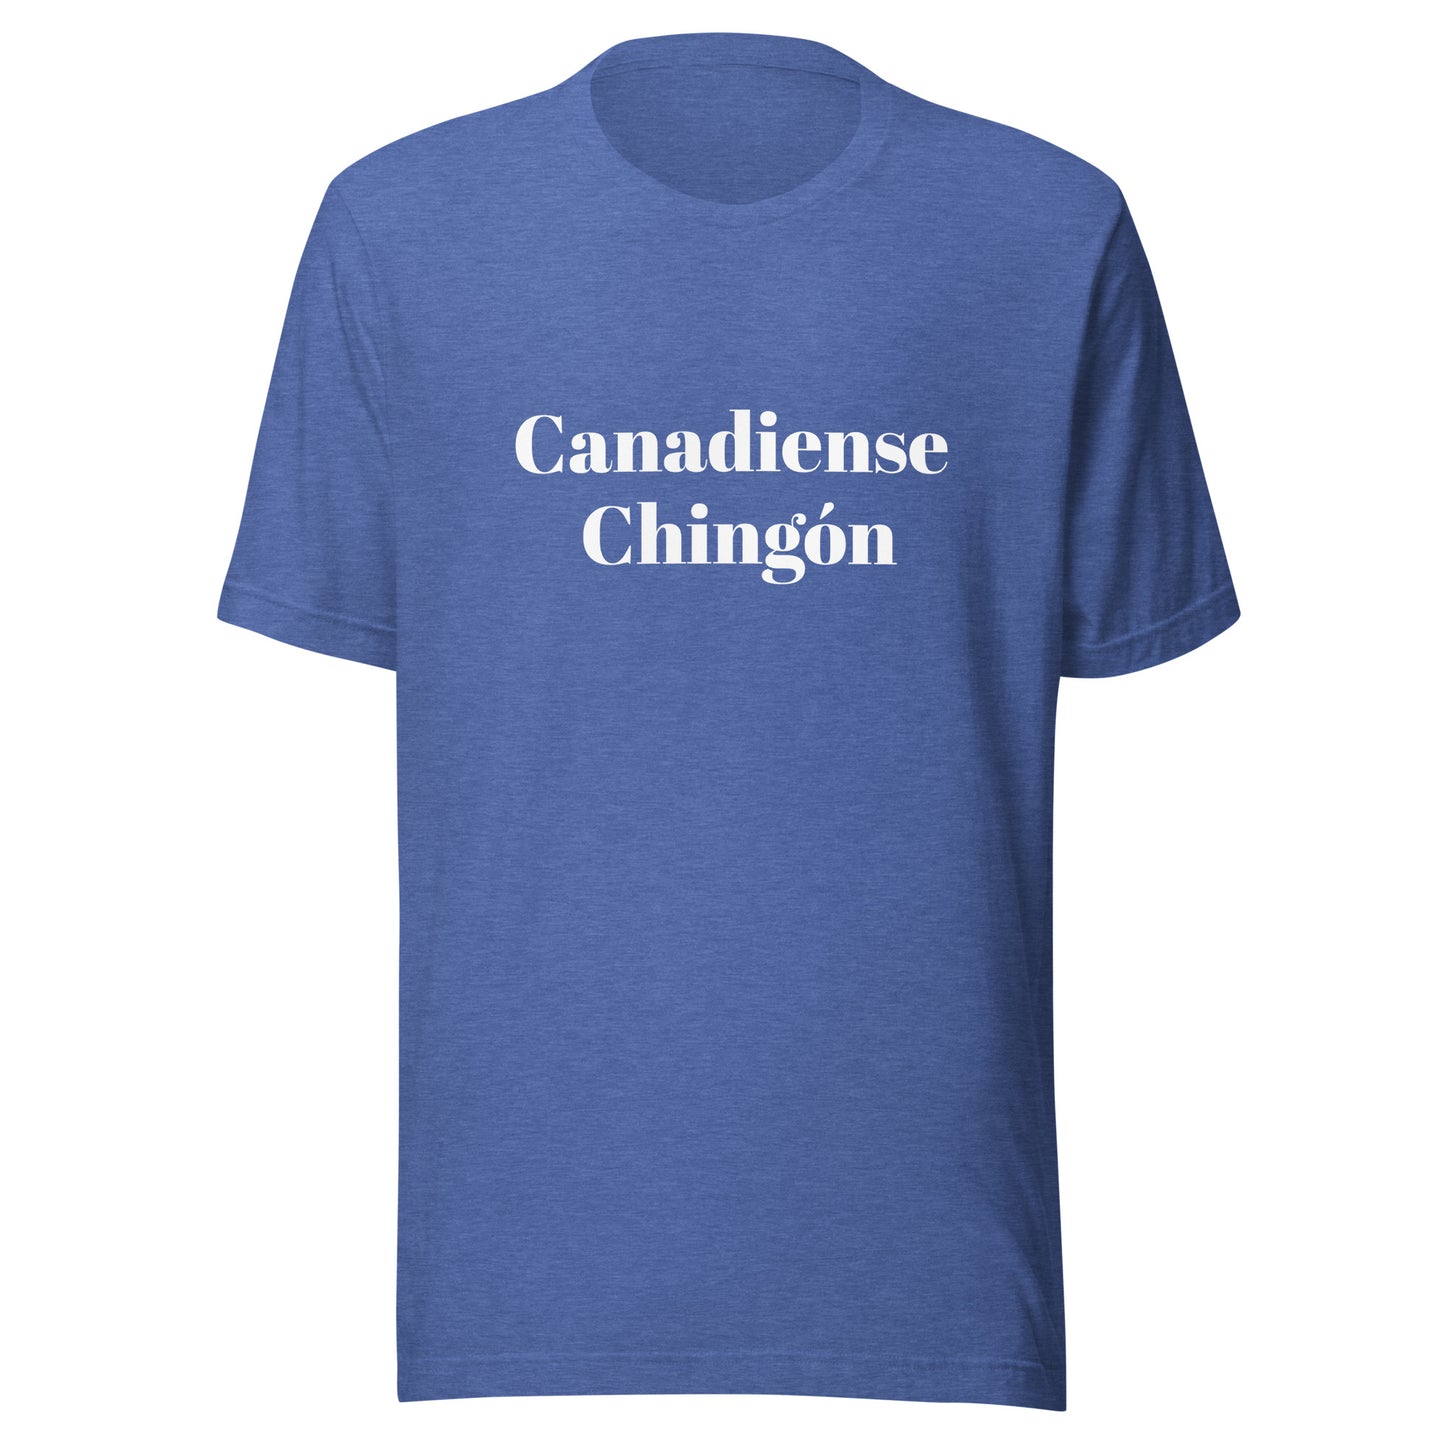 Canadiense Chingon Unisex t-shirt